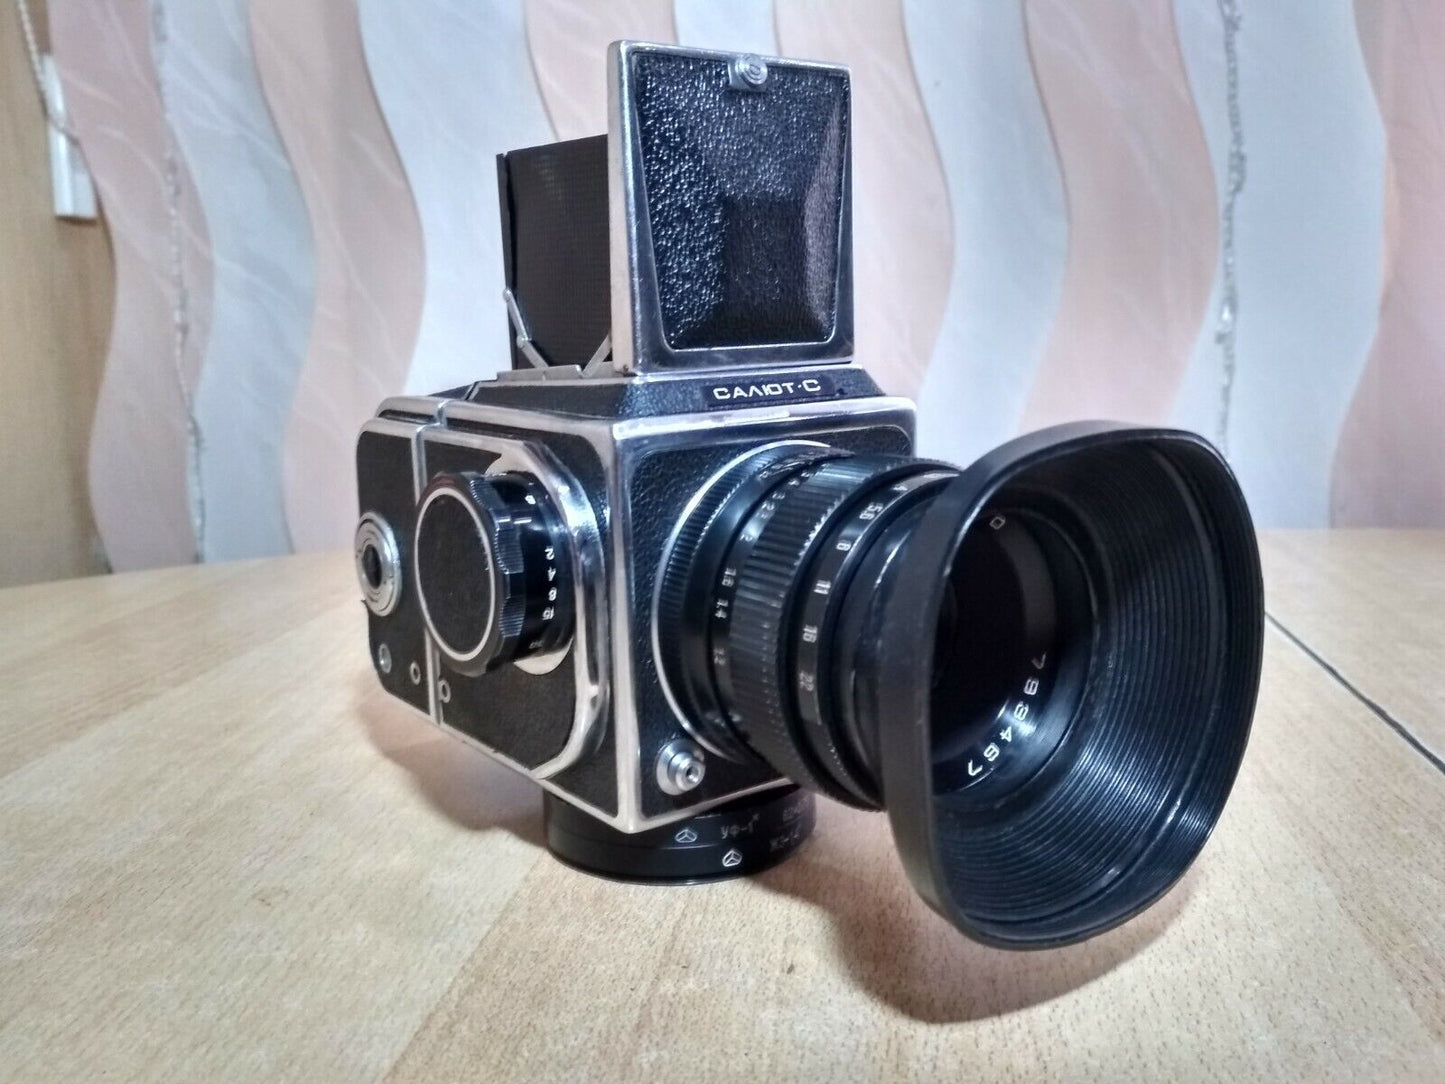 SALUT-C CLA (Kiev-88 Hasselblad) 6x6 SLR Medium Format Camera Salut-S Salyut